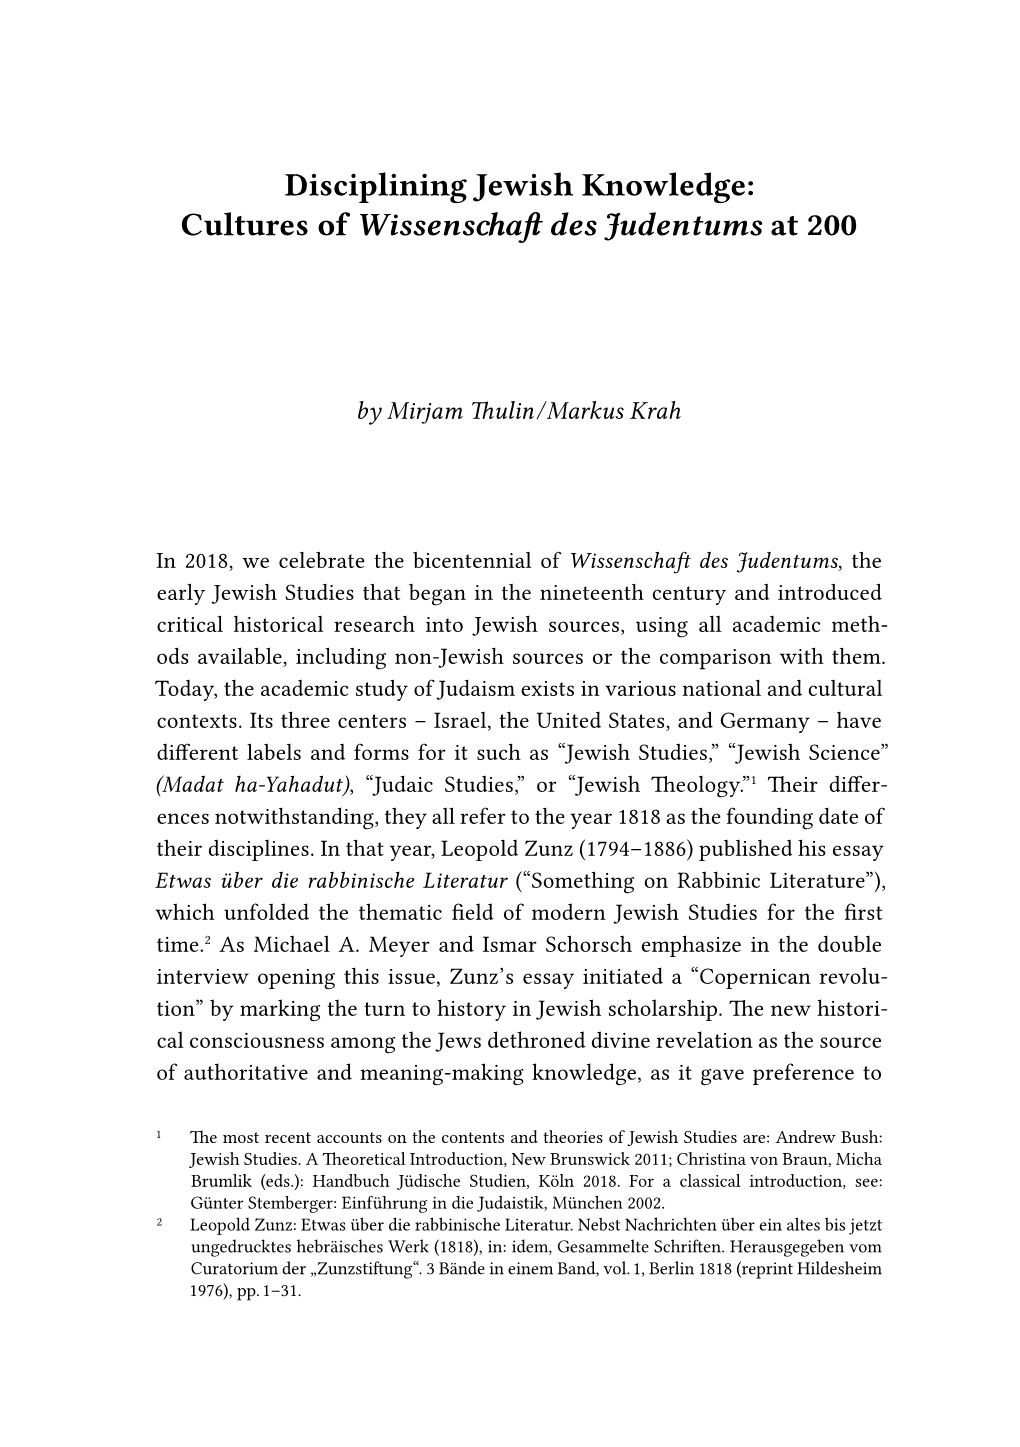 Disciplining Jewish Knowledge: Cultures of Wissenschaft Des Judentums at 200